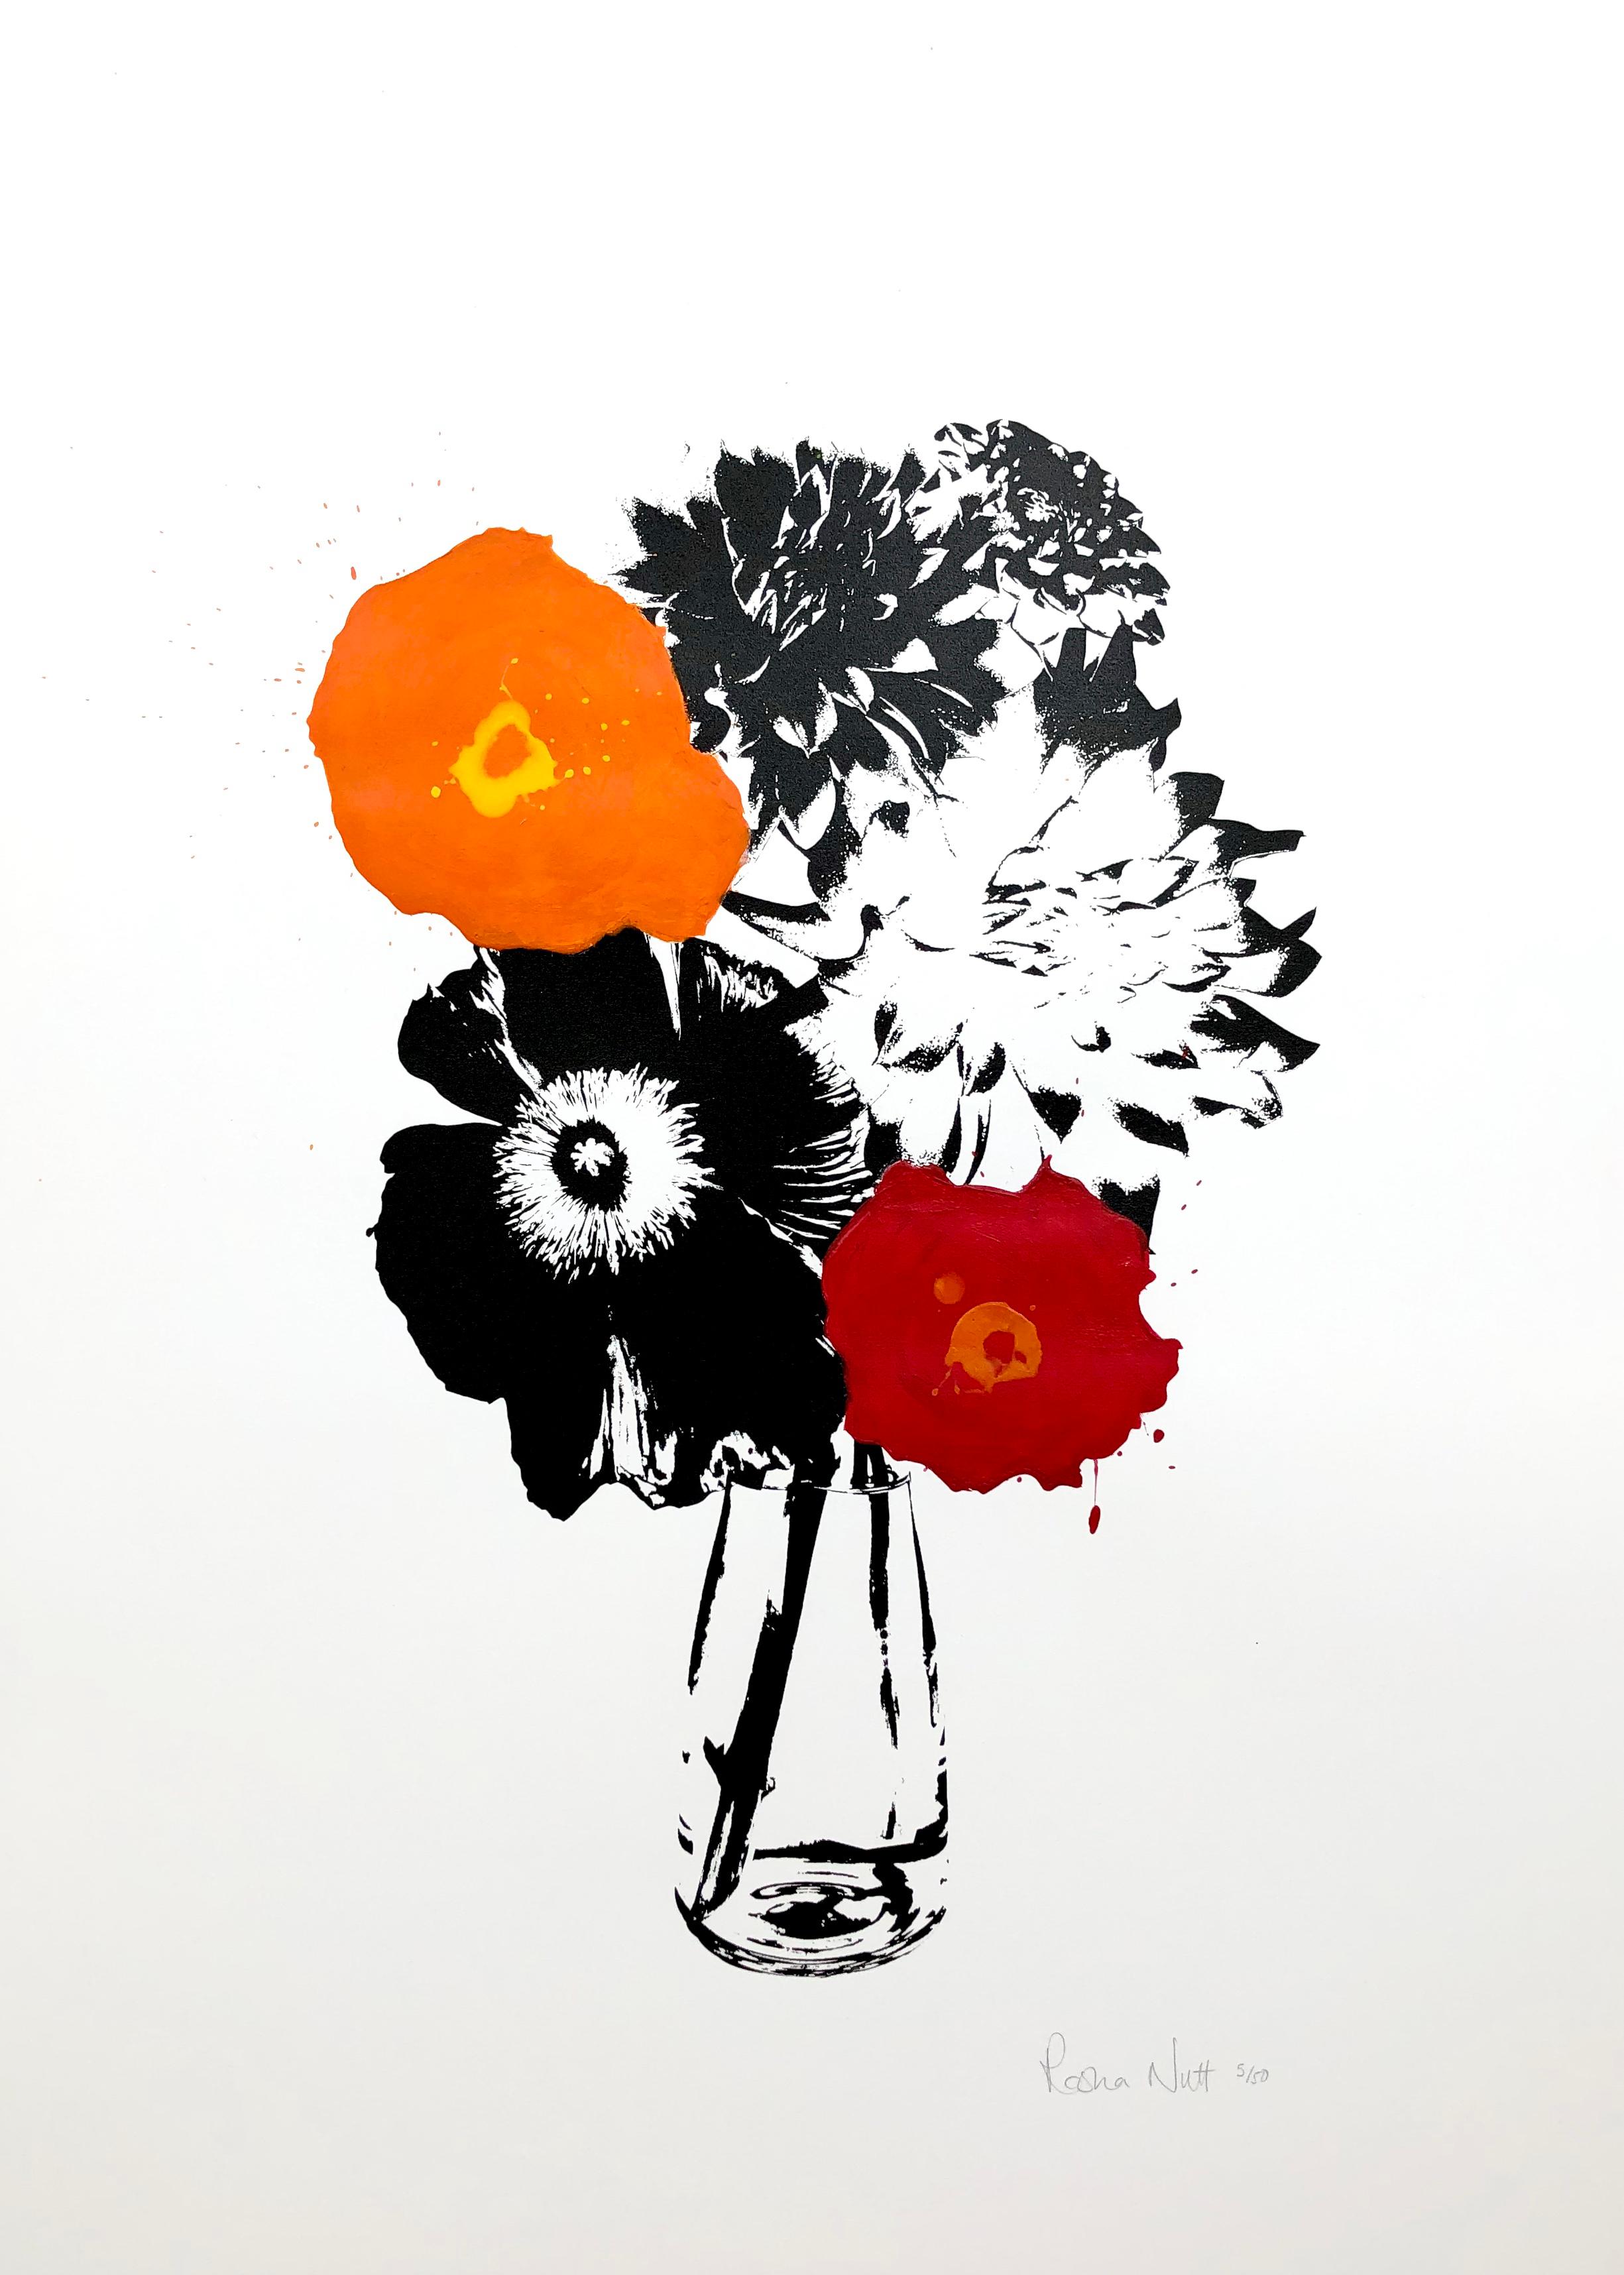 Rosha Nutt, Red and Orange Splash, Screen print, Edition 50, 50x70 cm, £120, 2020.